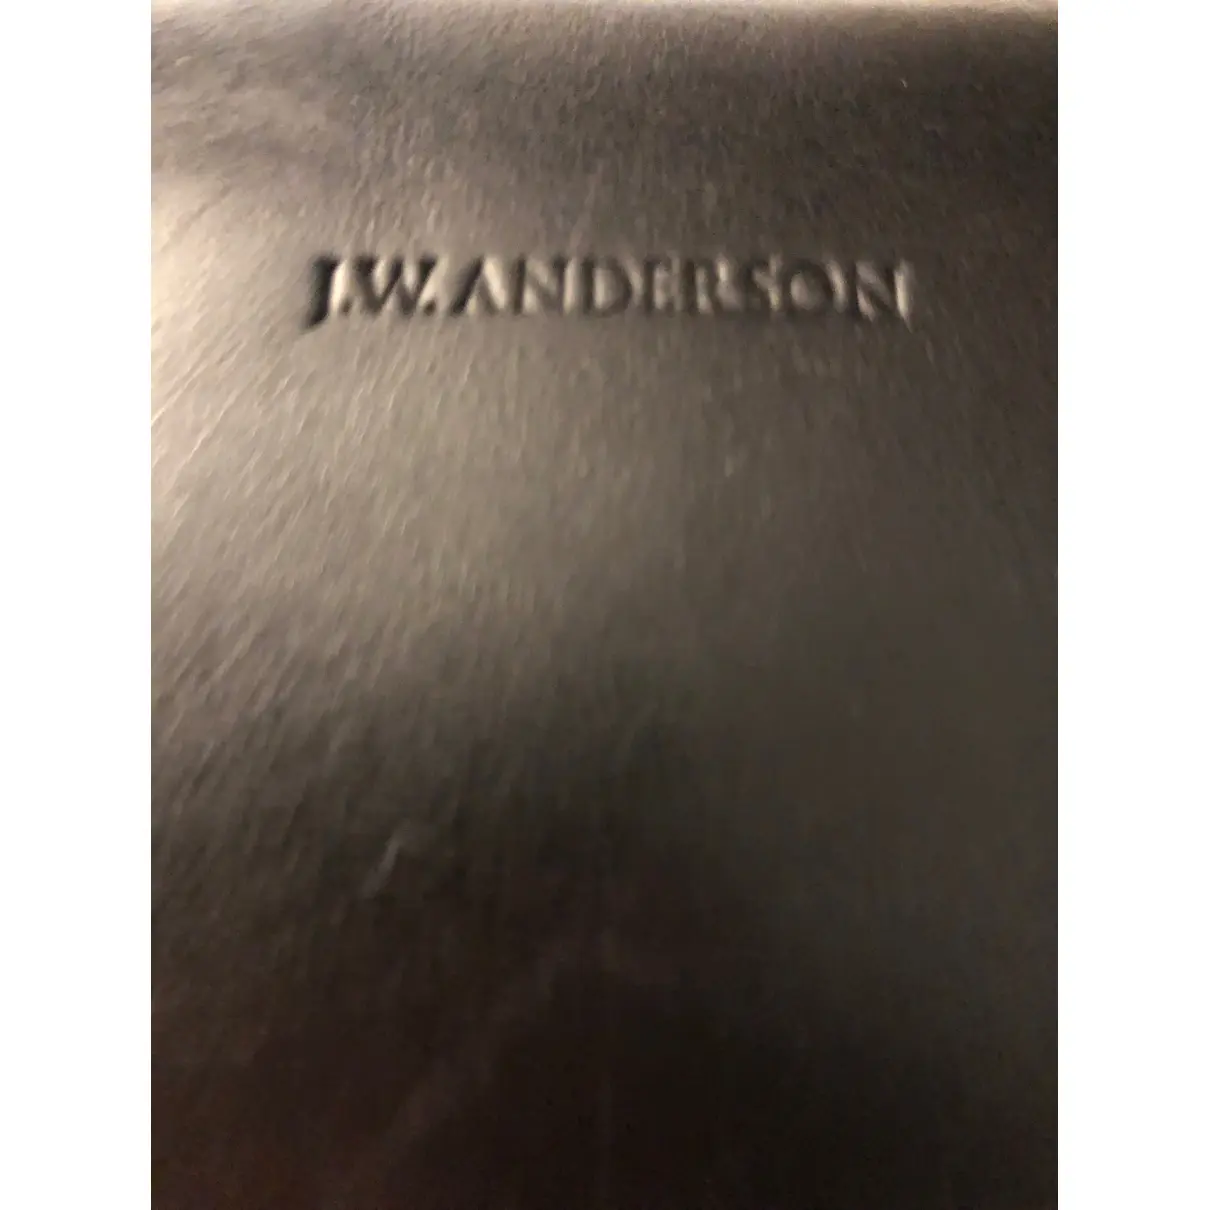 Buy JW Anderson Moon leather handbag online